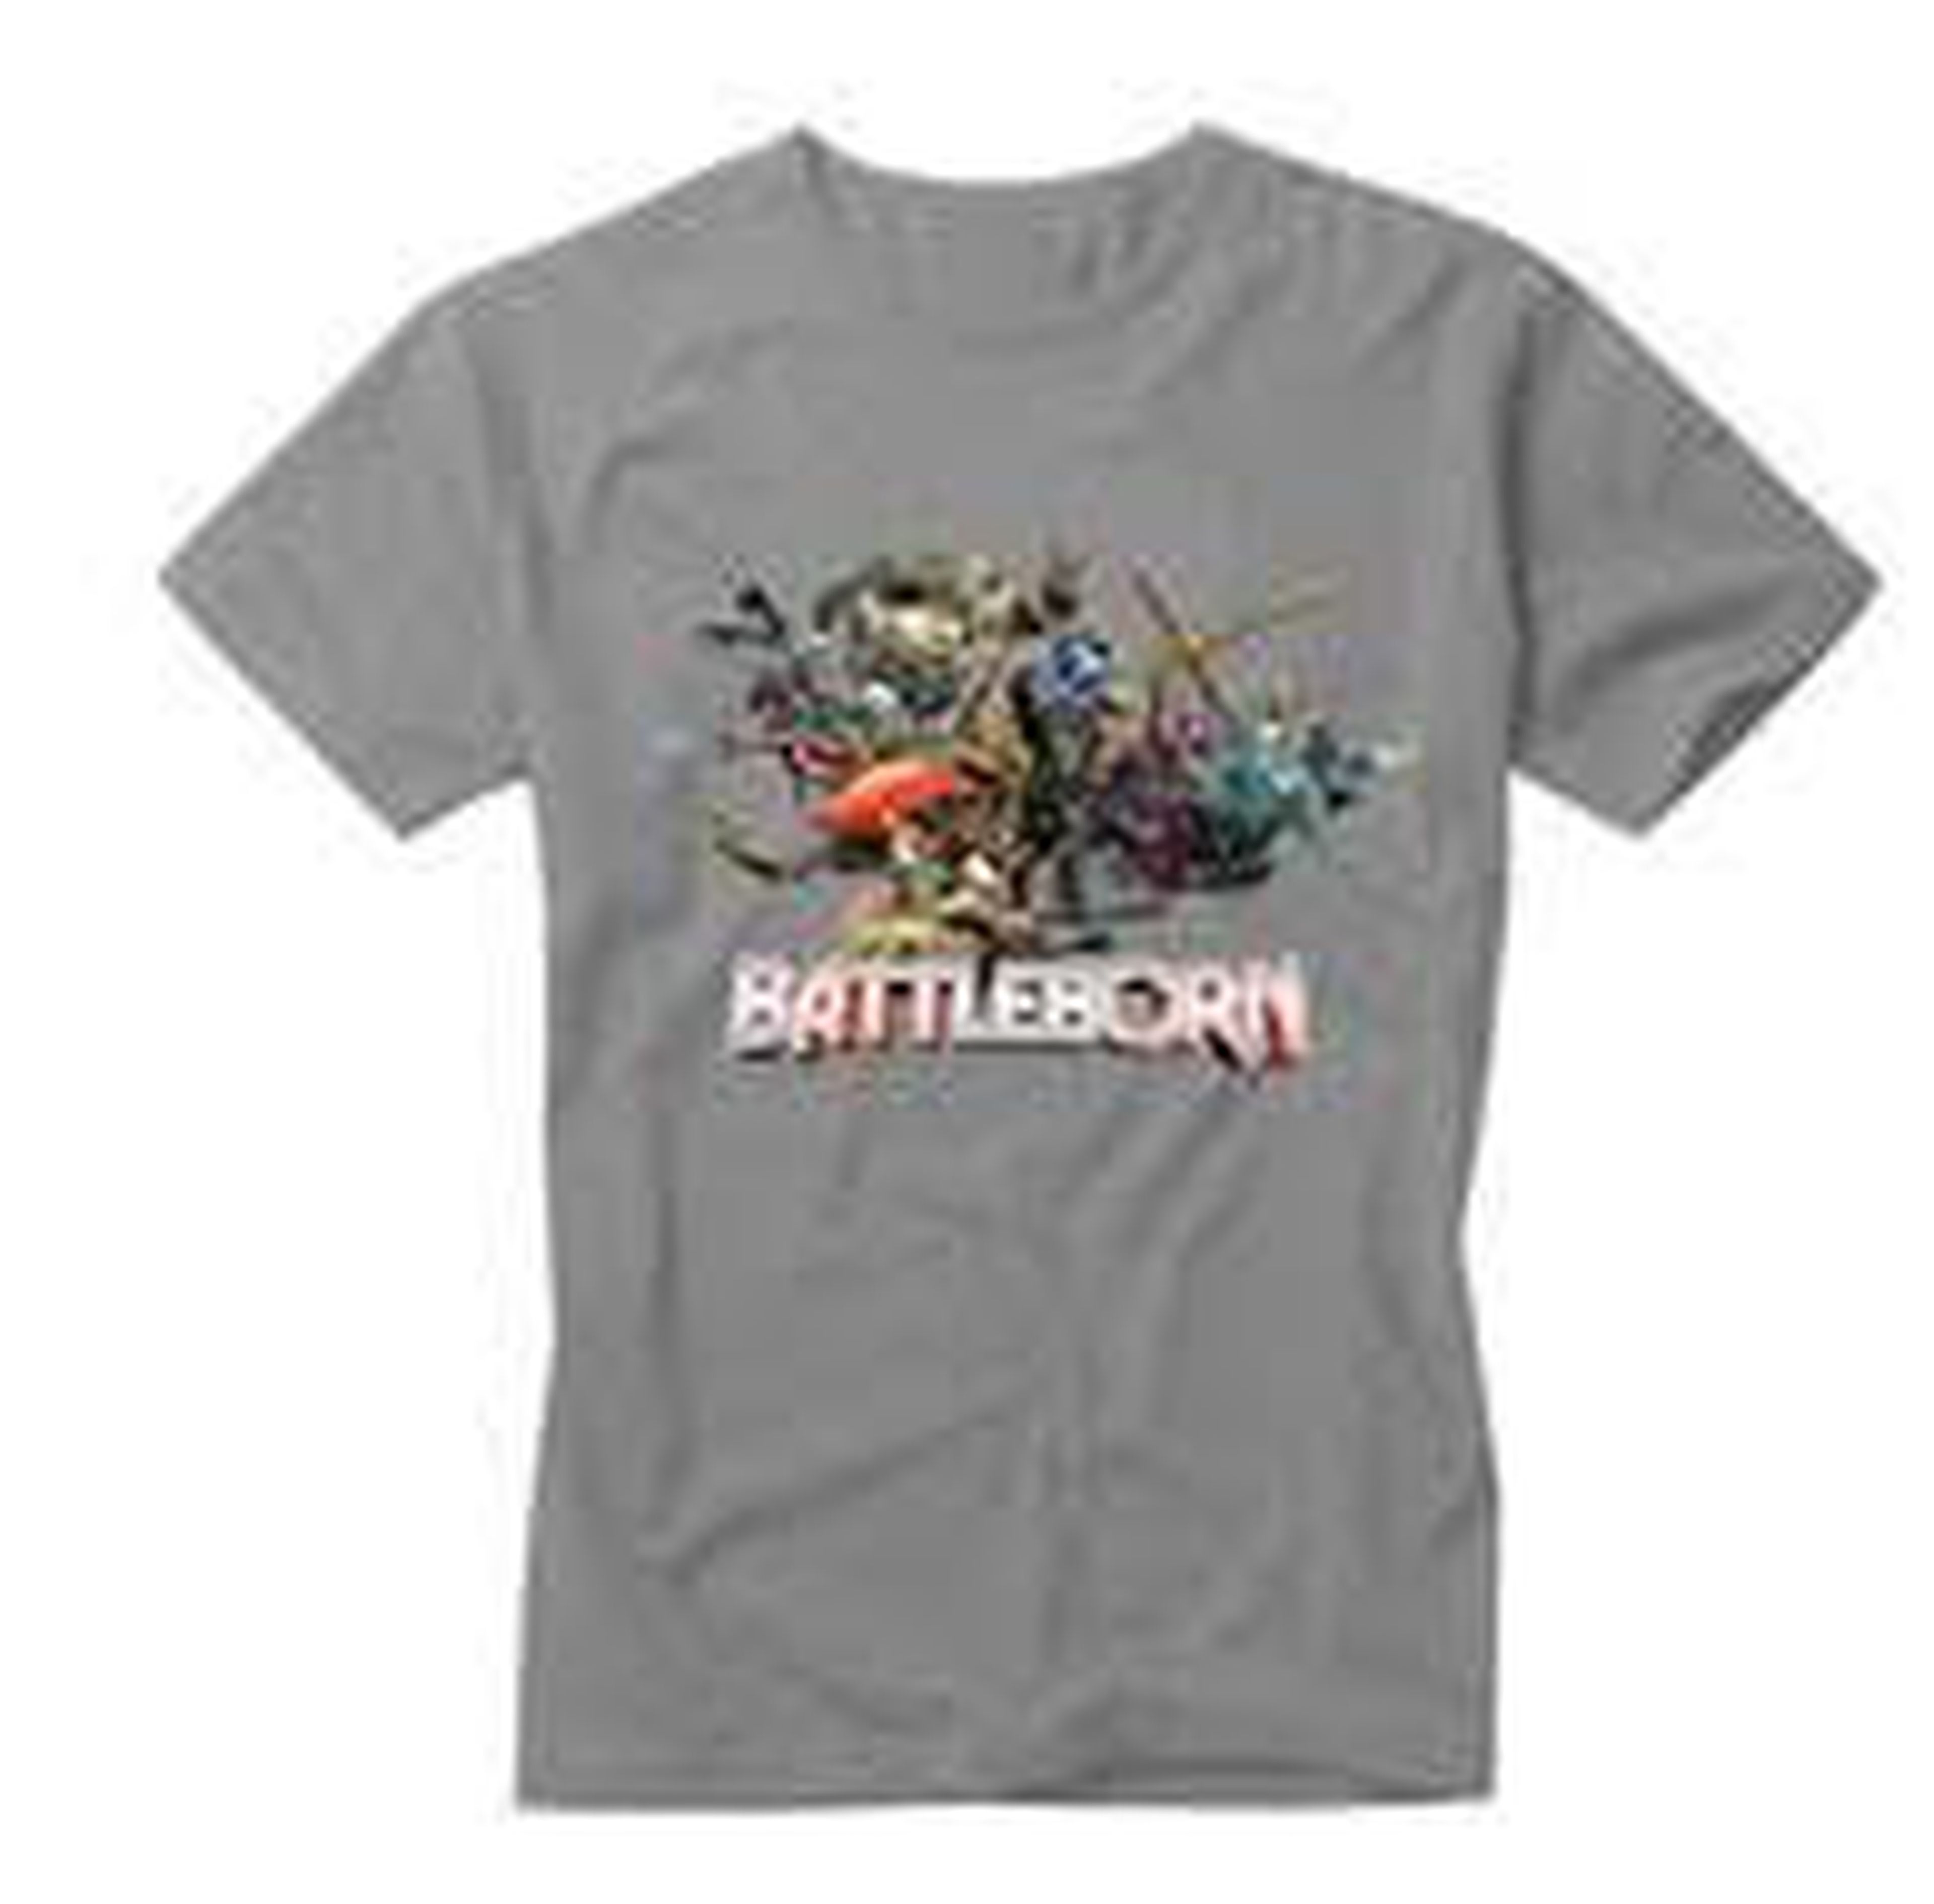 Battleborn - Gana 5 packs de merchandising (Ganadores)